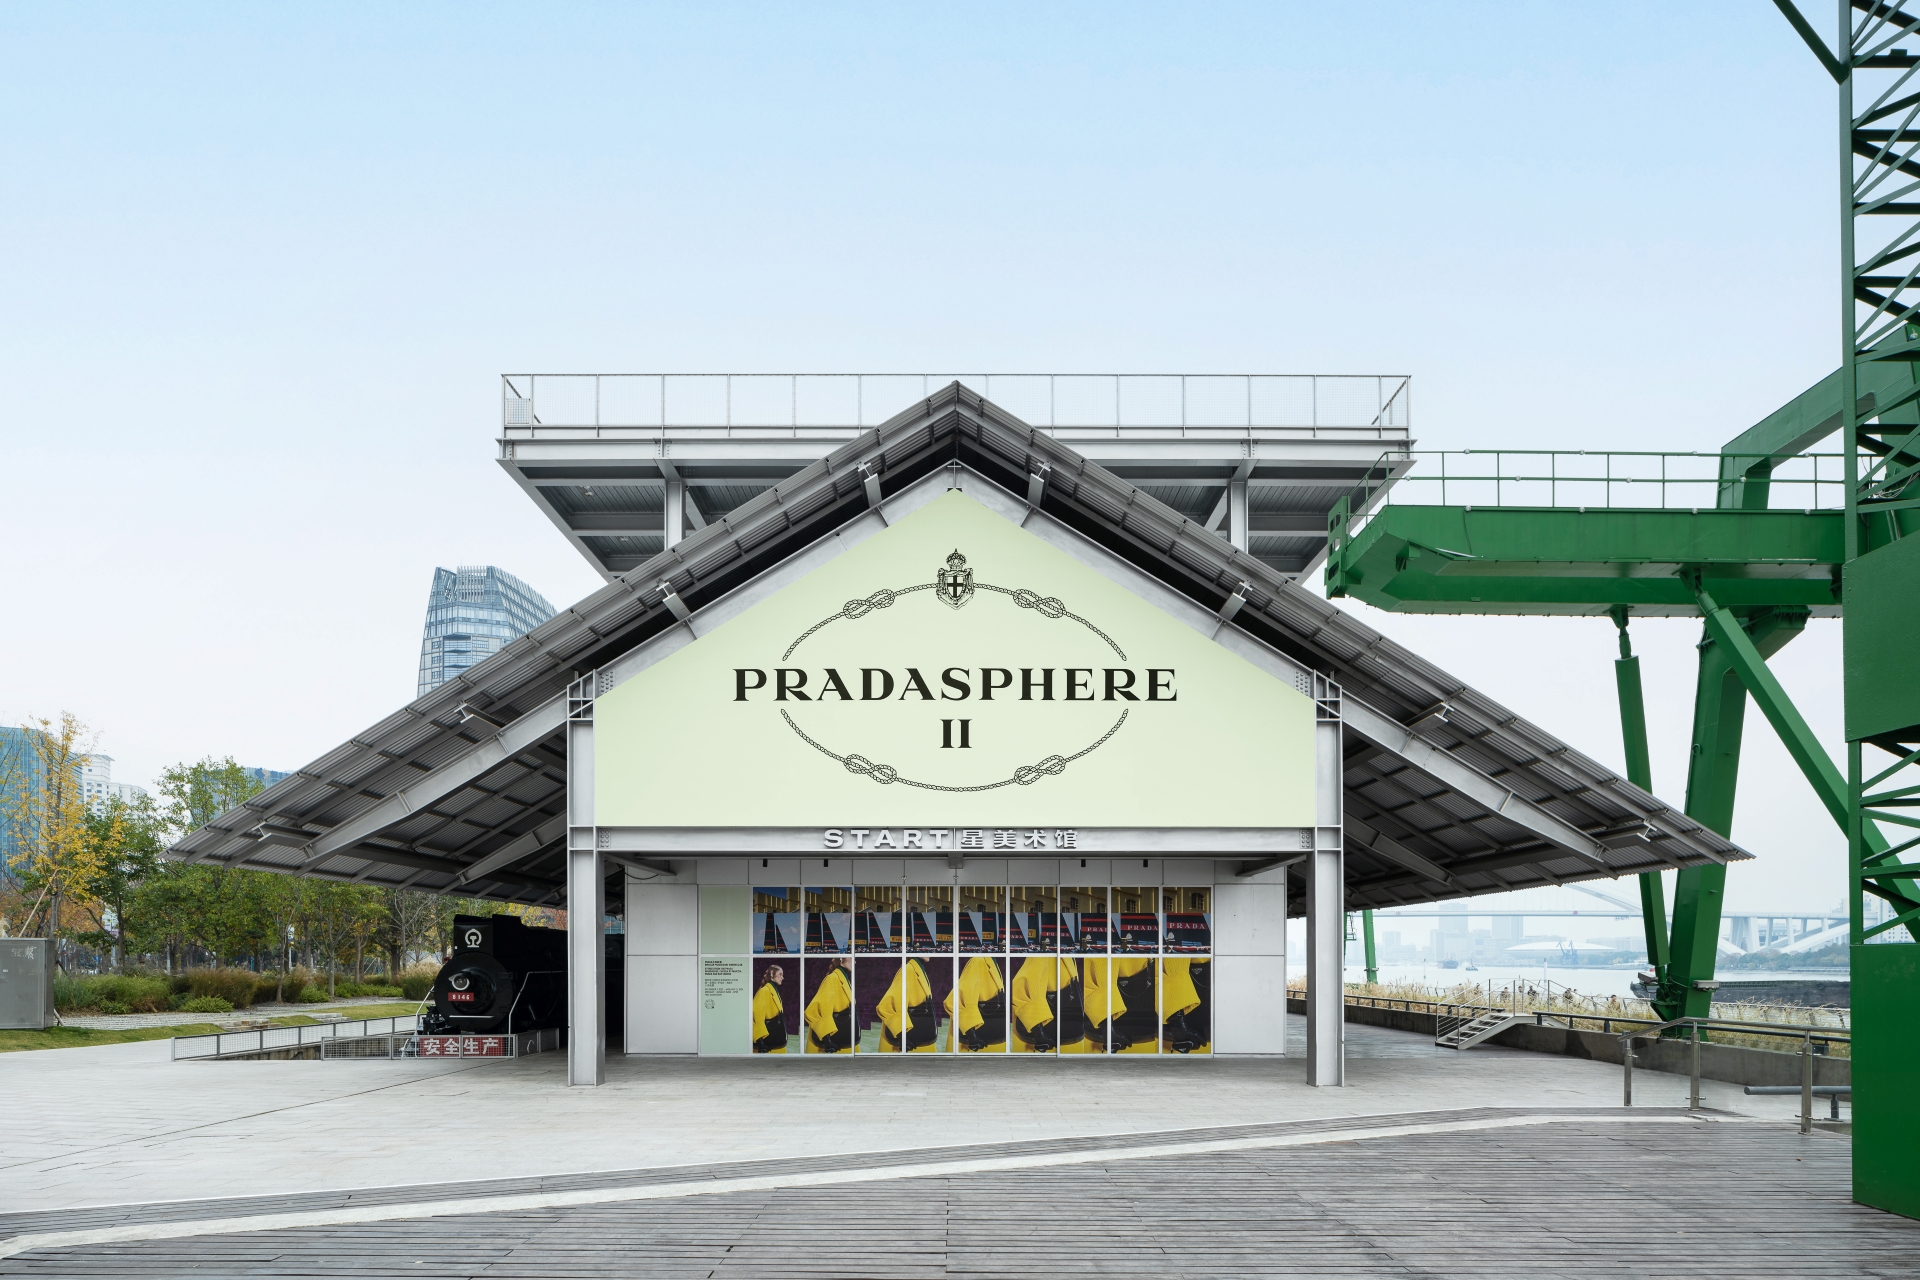 Pradasphere II: A Deep Dive Into the World of Prada